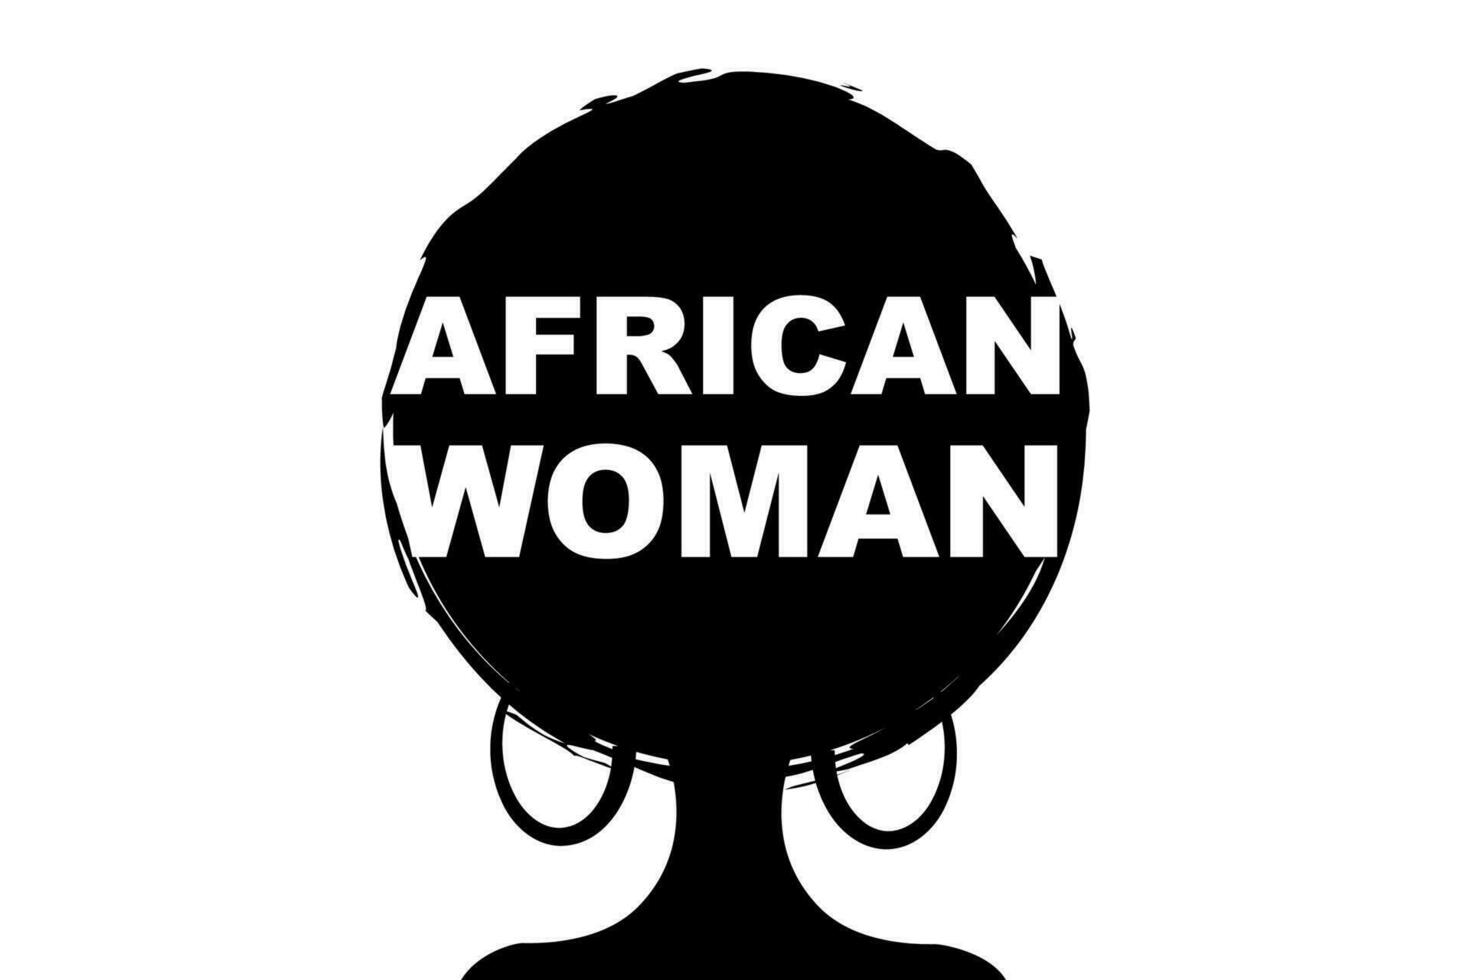 encaracolado afro cabelo, retrato africano mulher conceito, Preto logotipo ícone, Sombrio pele fêmea face com encaracolado cabelo afro, étnico tradicional brincos, cabelo estilo conceito, vetor isolado ou branco fundo